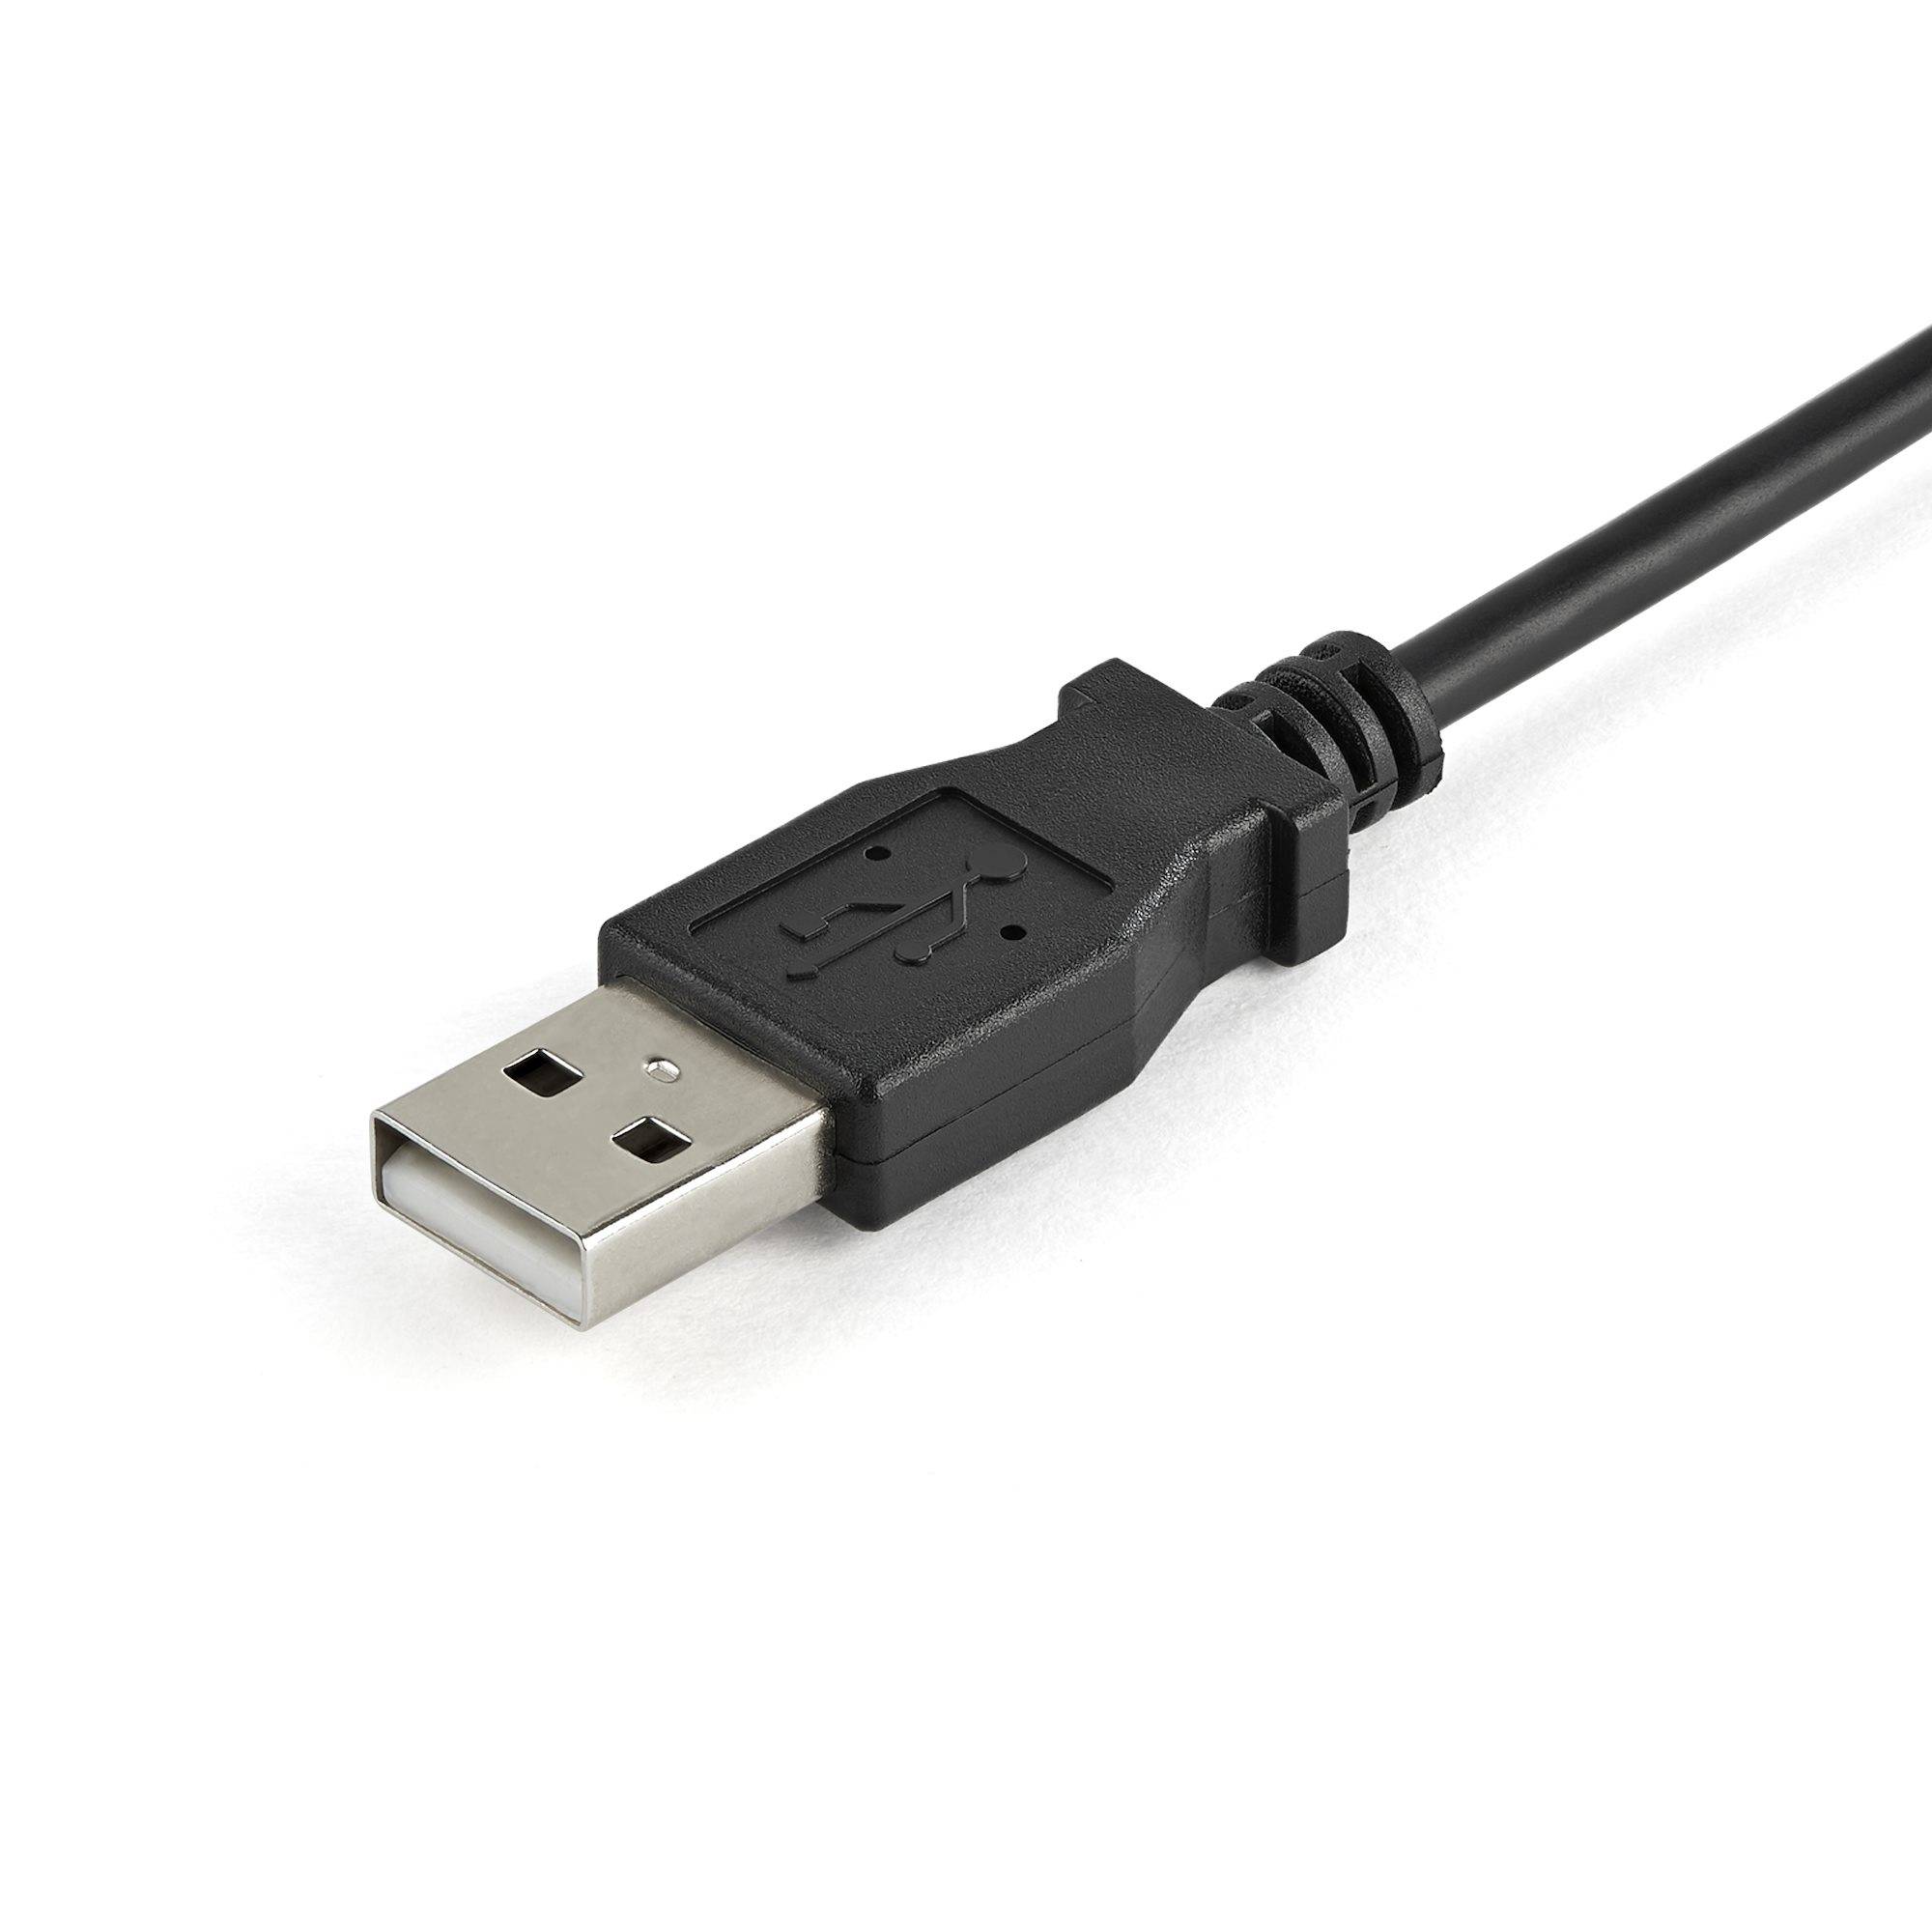 Rca Informatique - image du produit : PORTABLE KVM CONSOLE VGA USB CRASH CART ADAPTER